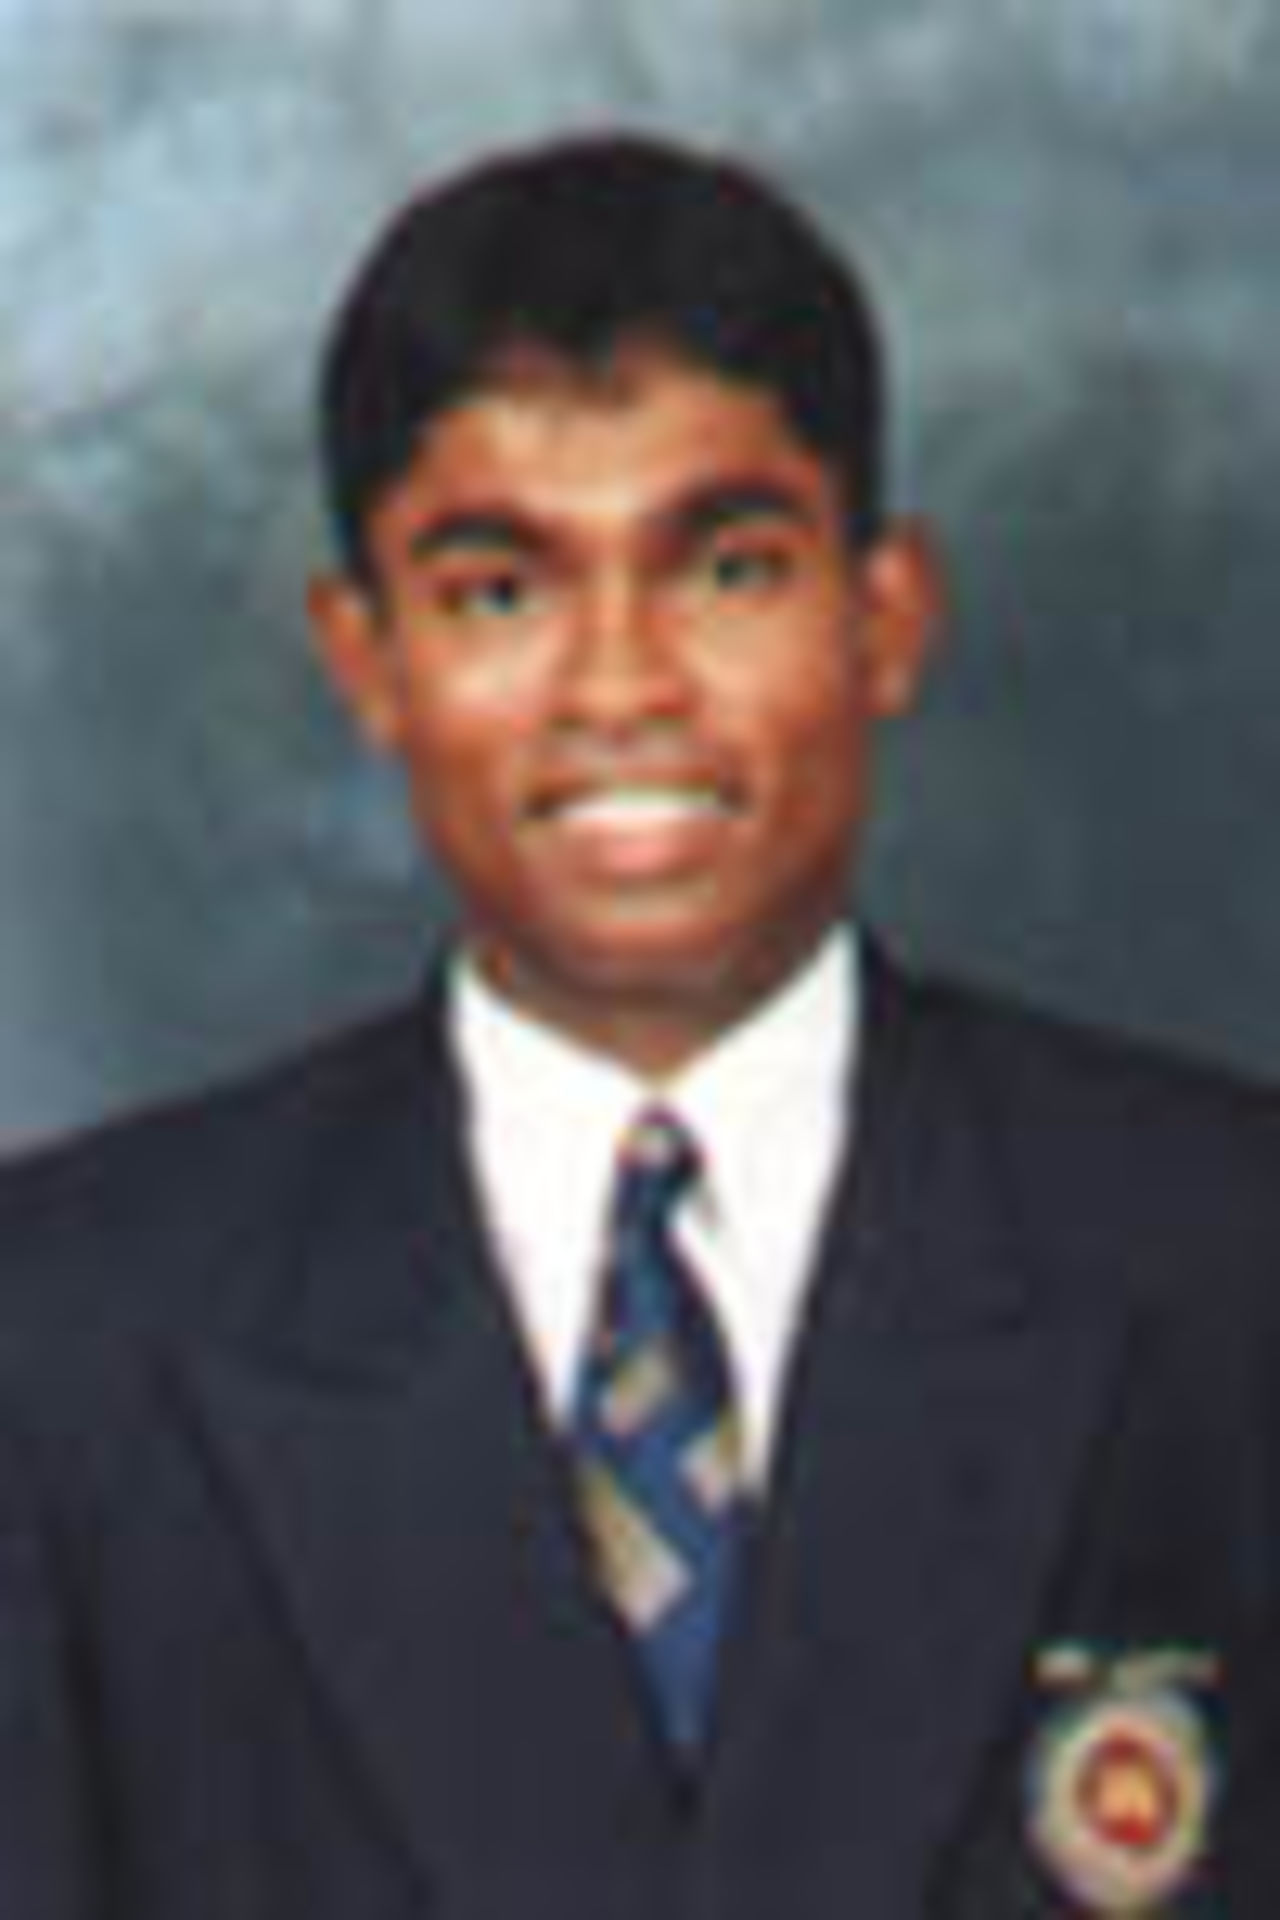 Portrait of Romesh Kaluwitharana, 2001